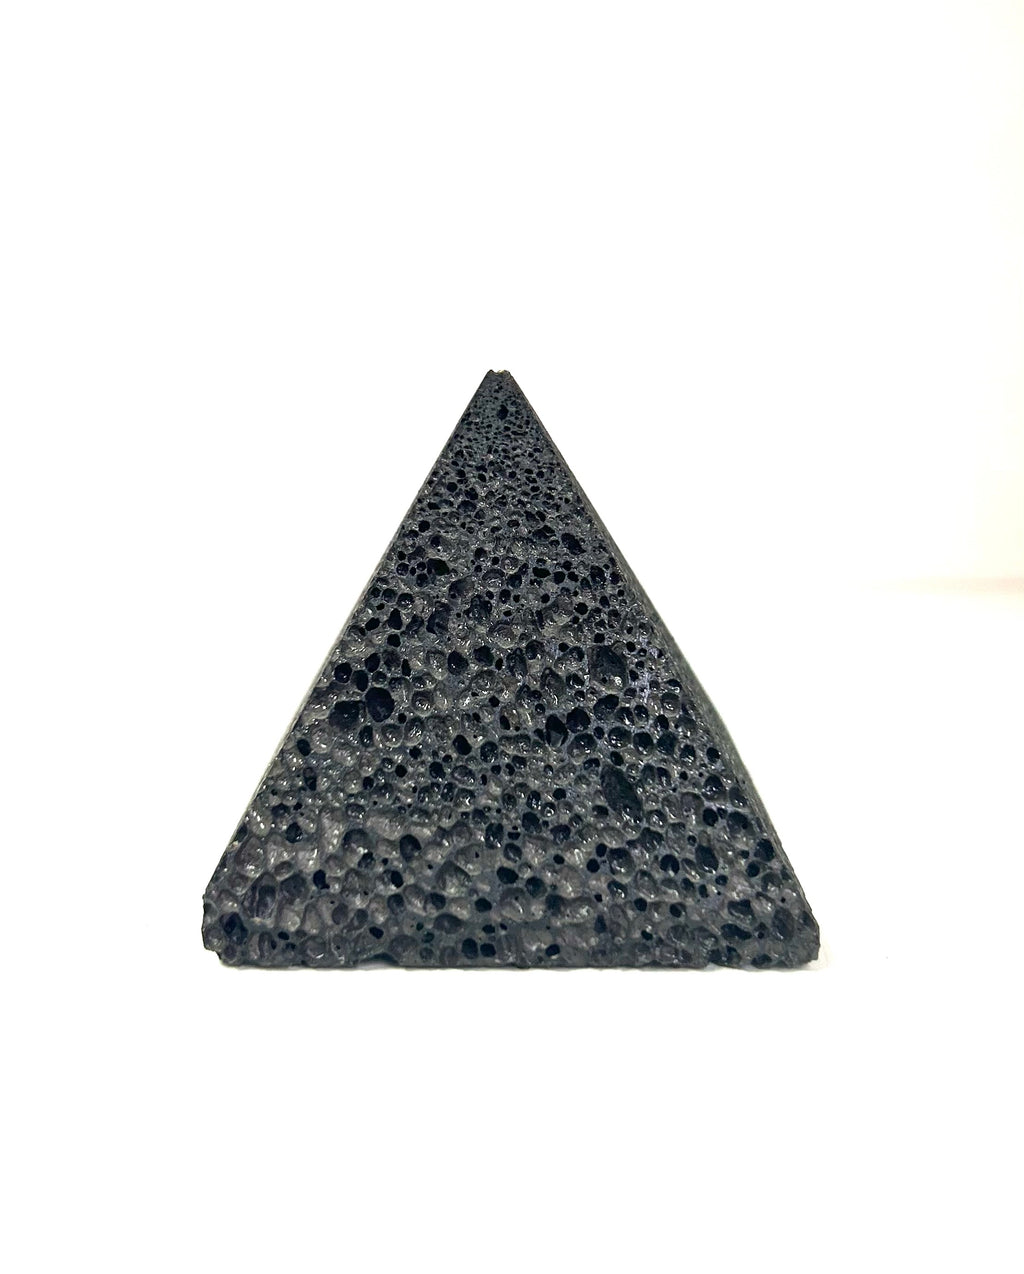 Lava Pyramid - Lighten Up Shop